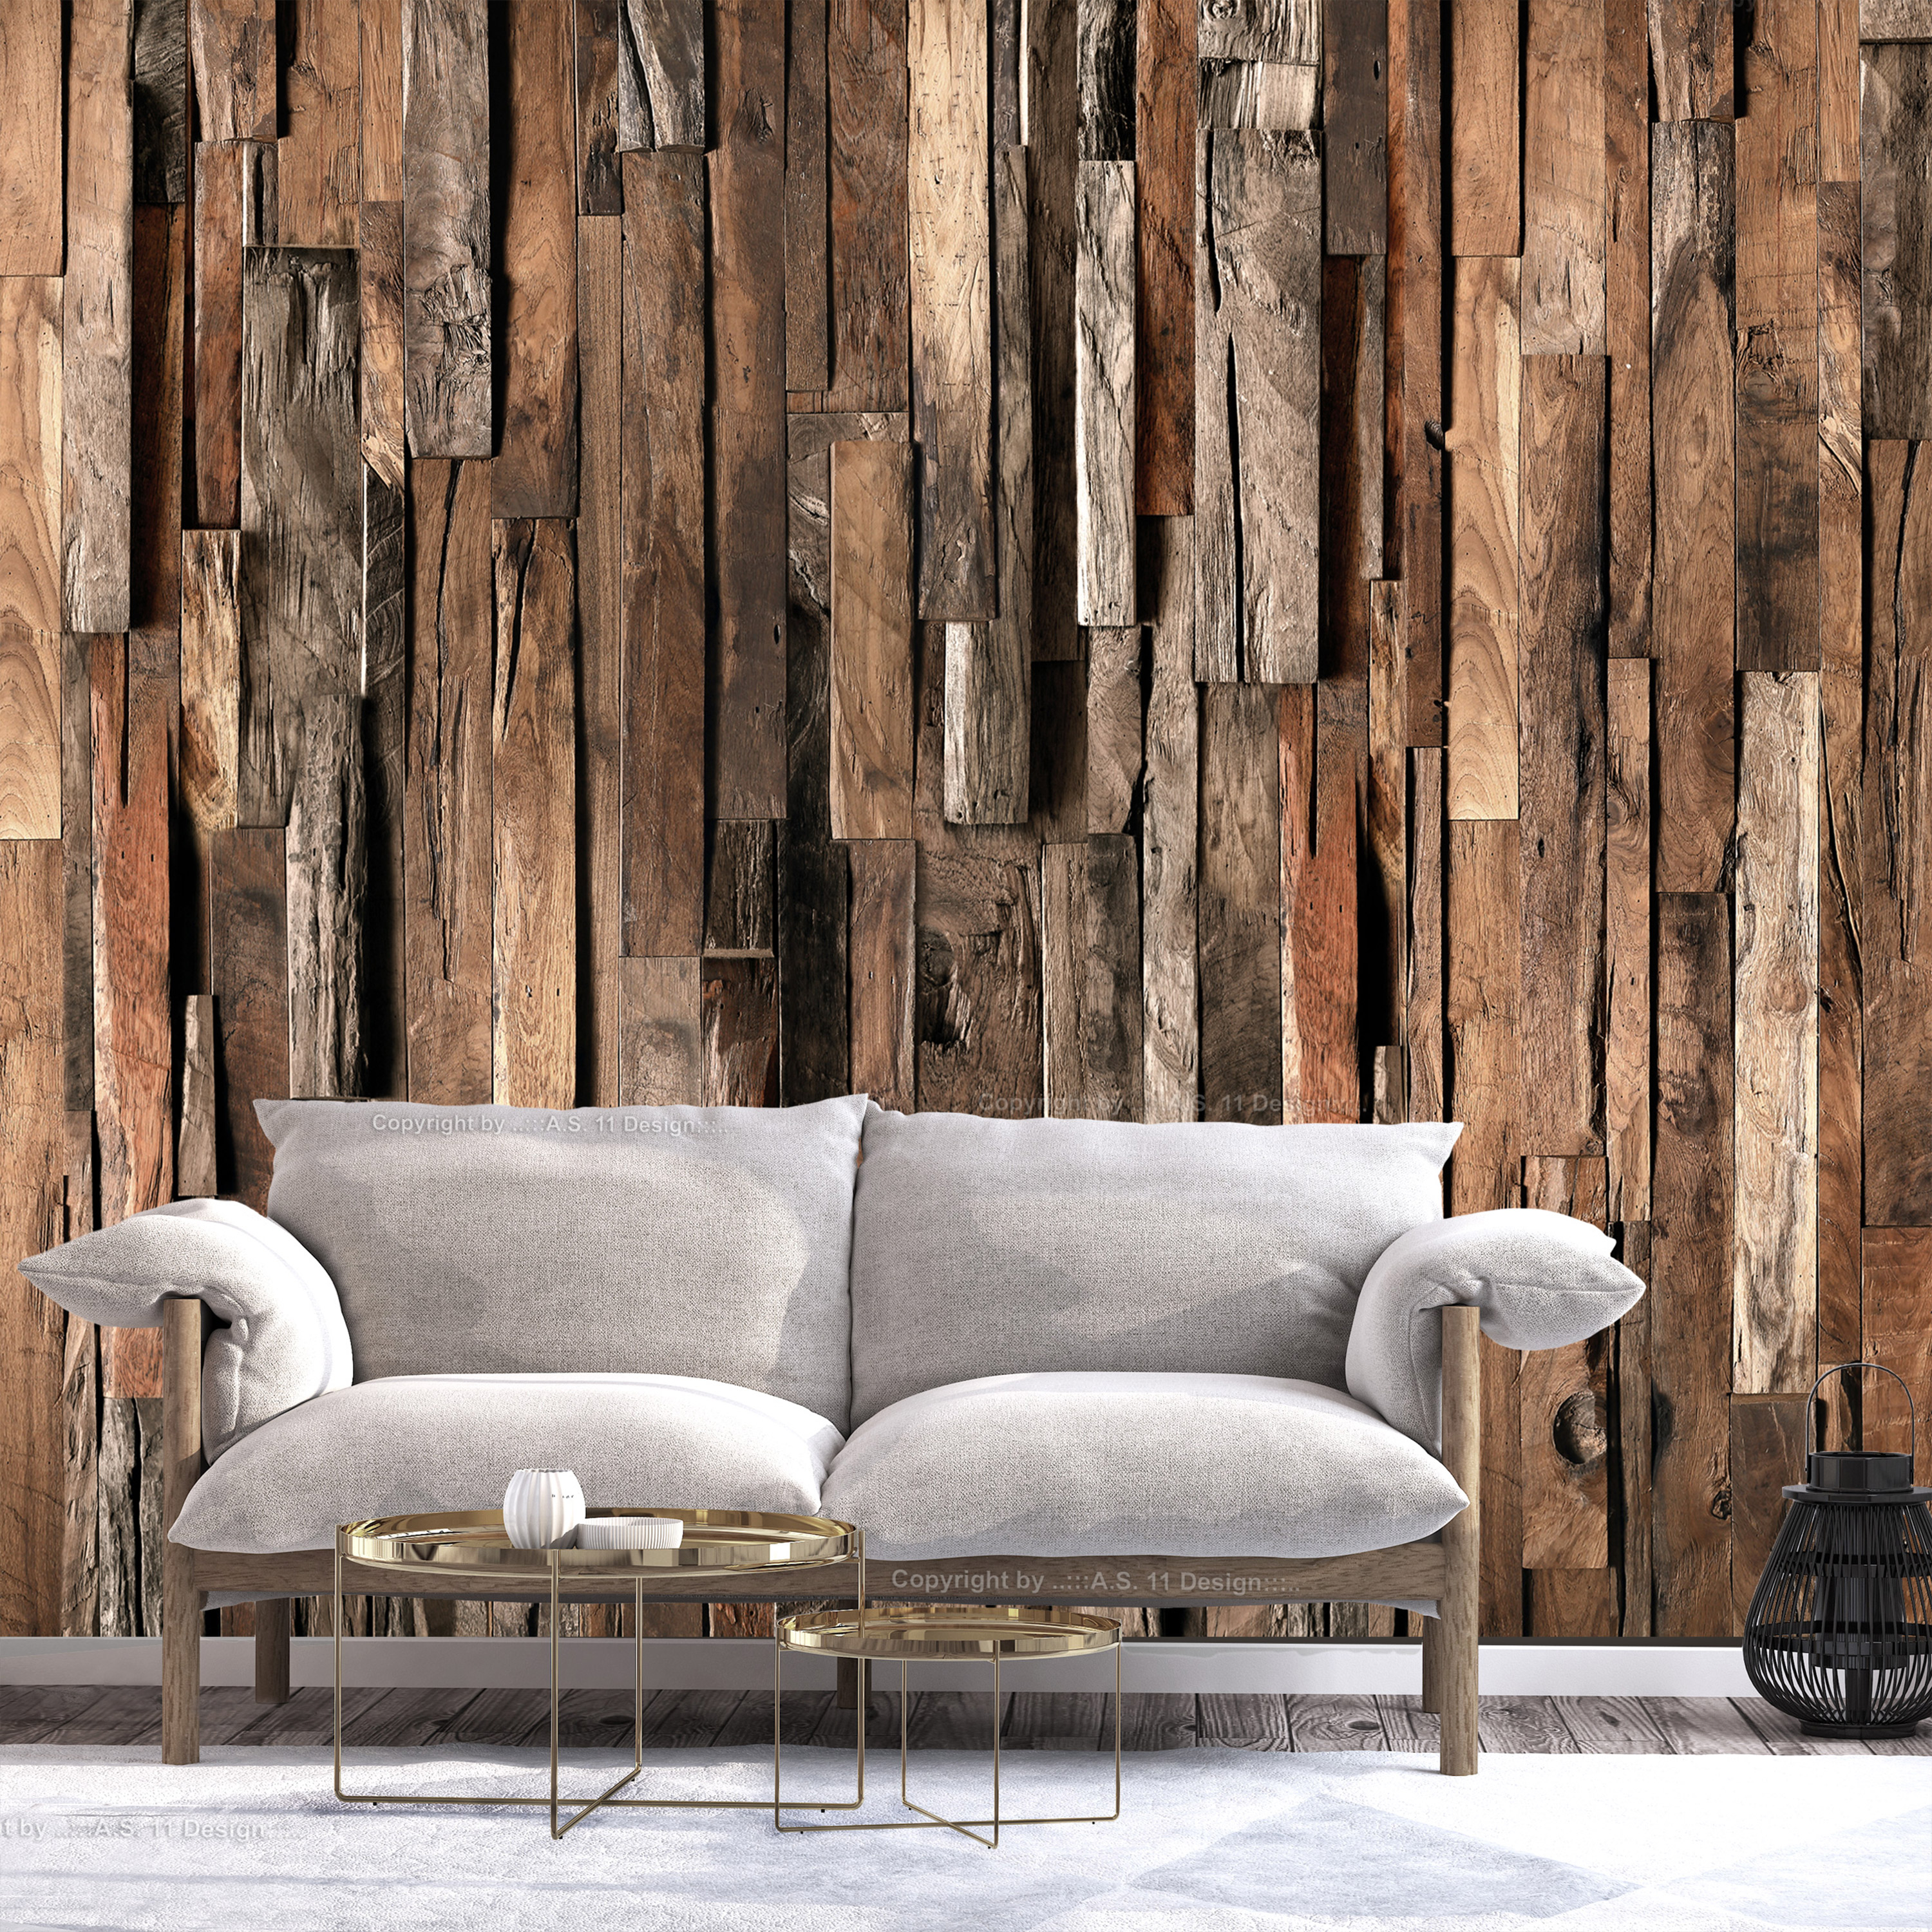 Self-adhesive Wallpaper - Wooden Curtain (Brown) - 147x105